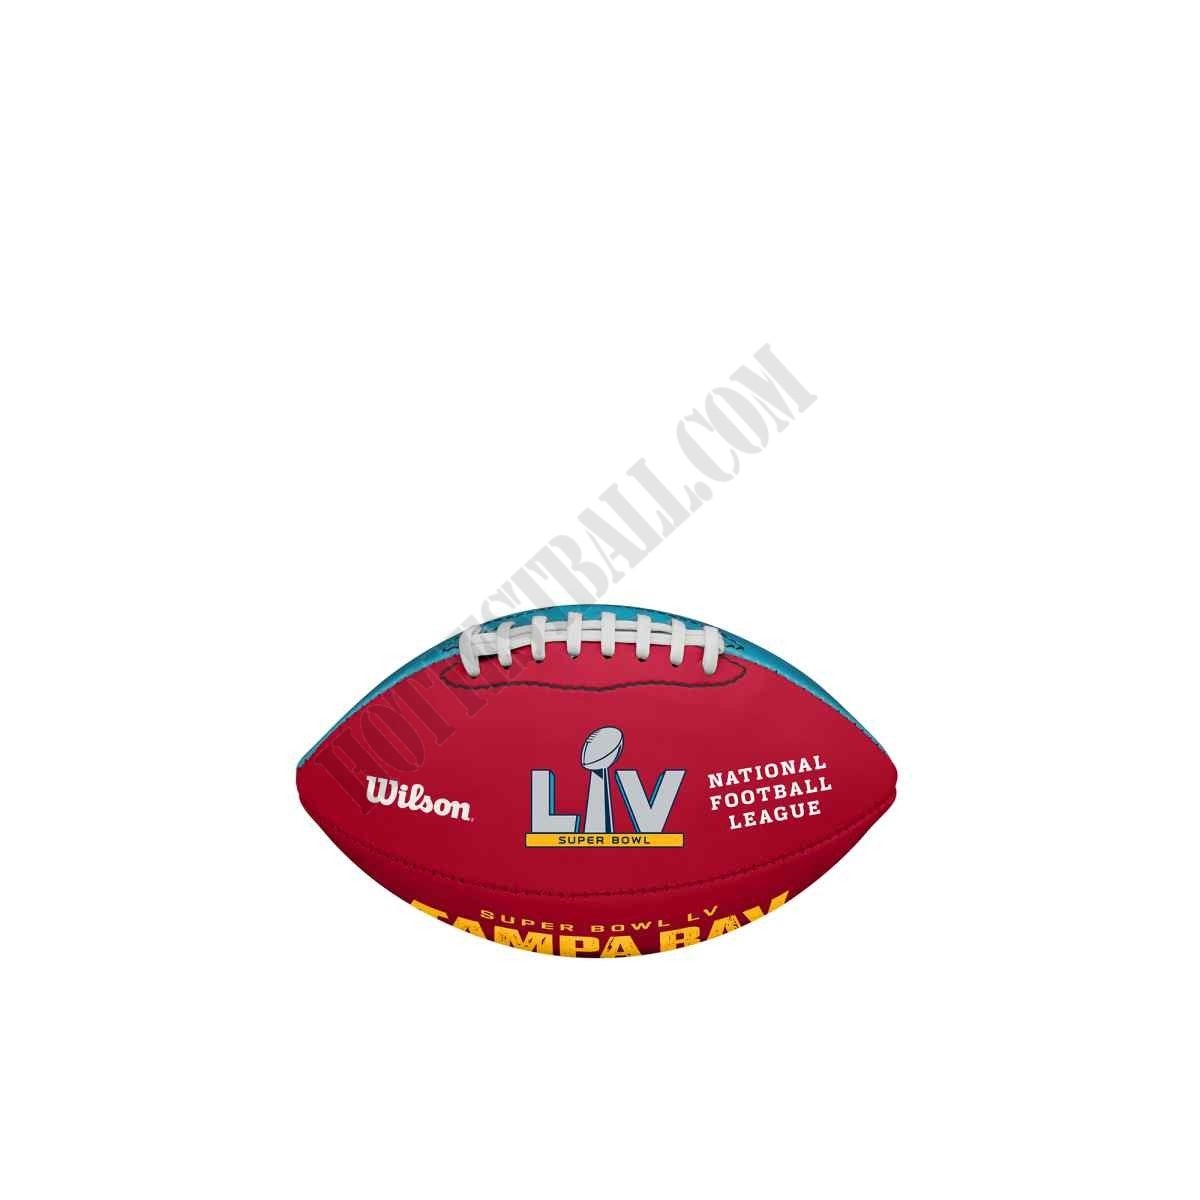 Super Bowl LV Micro Mini Football ● Wilson Promotions - -0